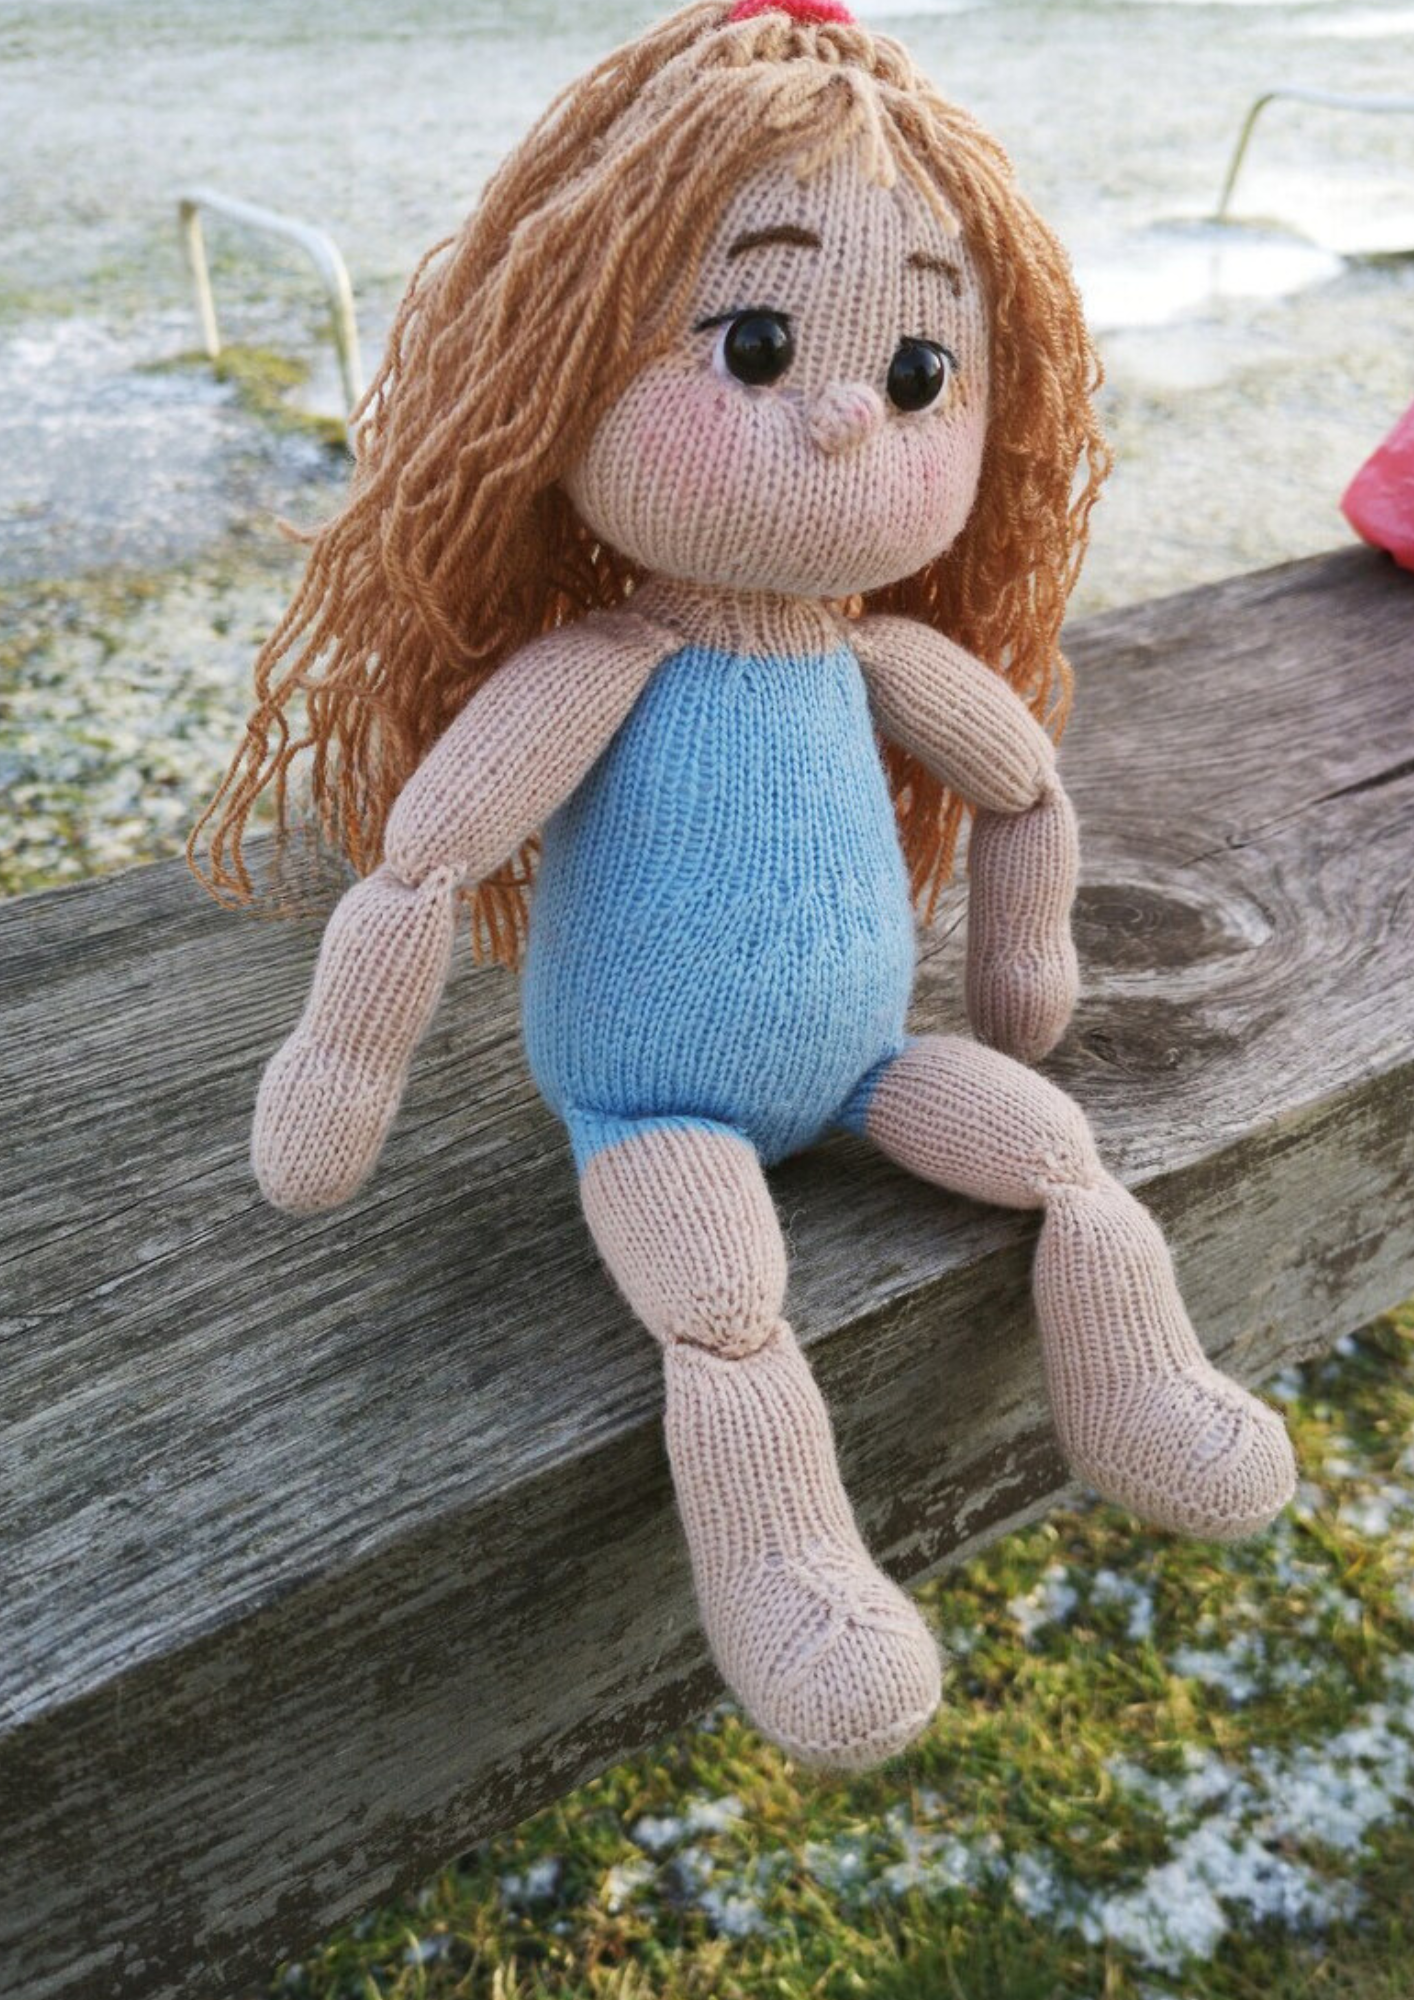 Mary knitting Doll pattern.